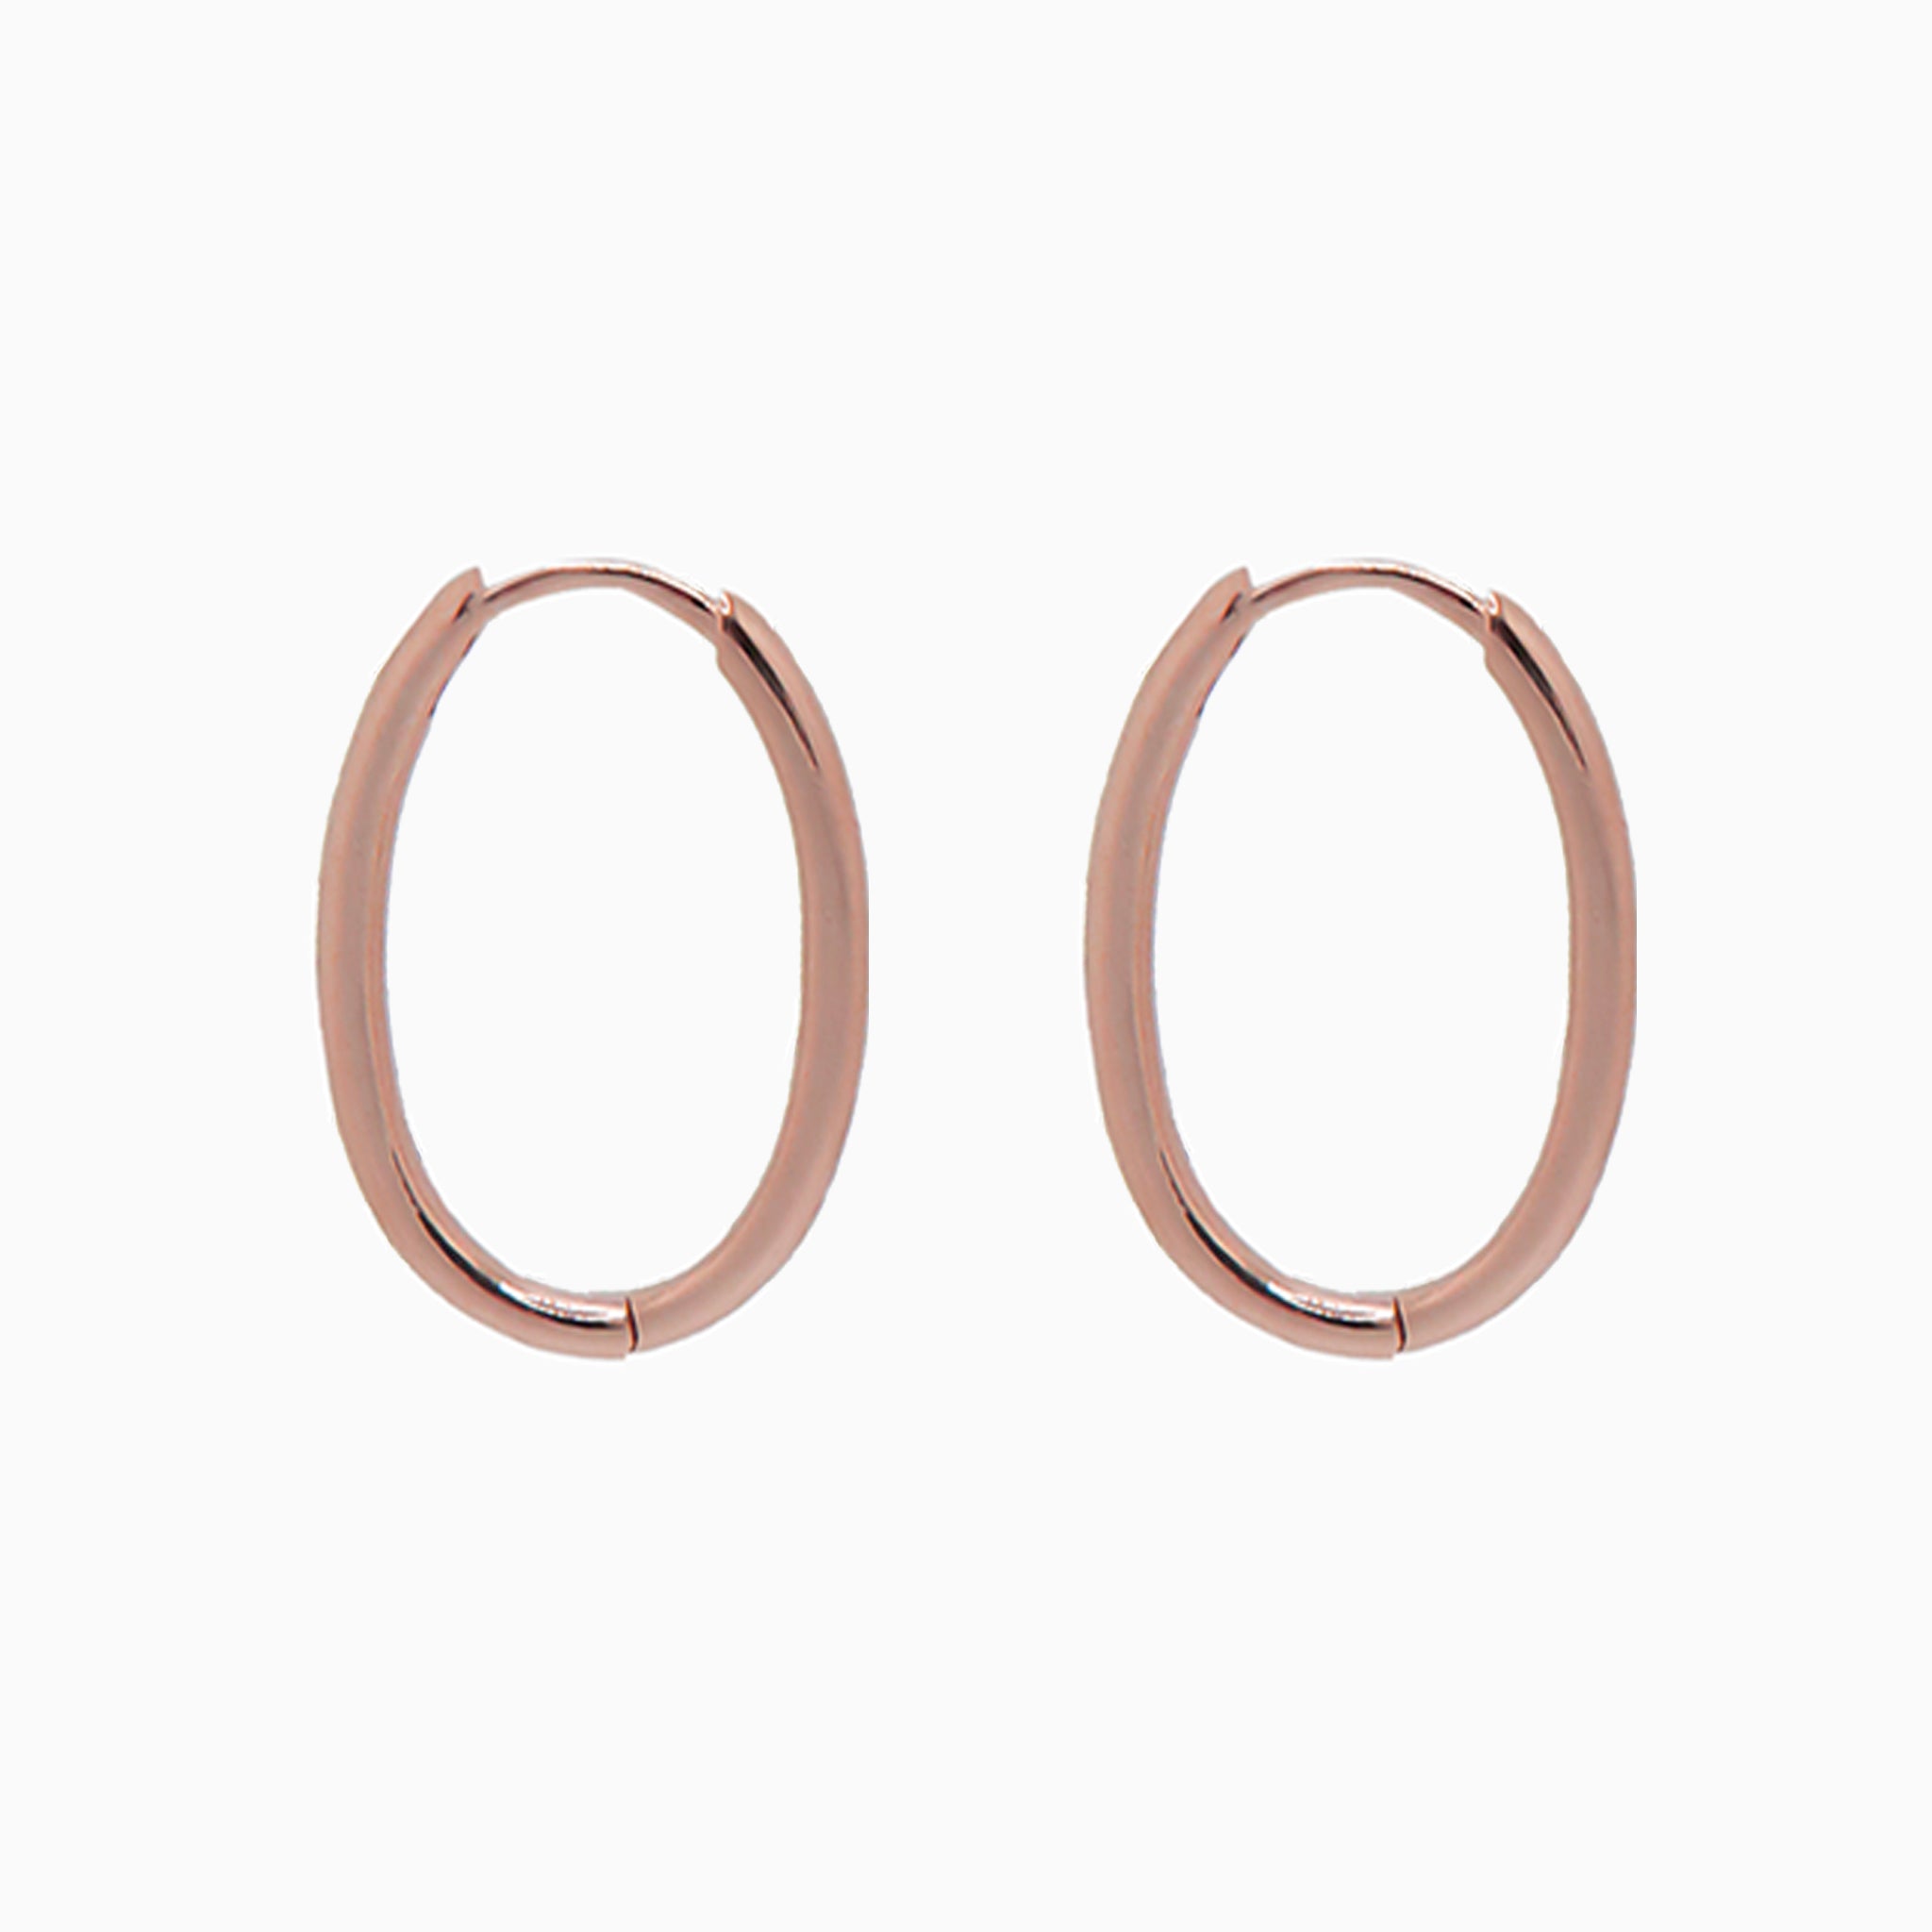 14k Rose Gold 19mm x 13mm Hinged Everyday Oval Hoop Earrings, Side View